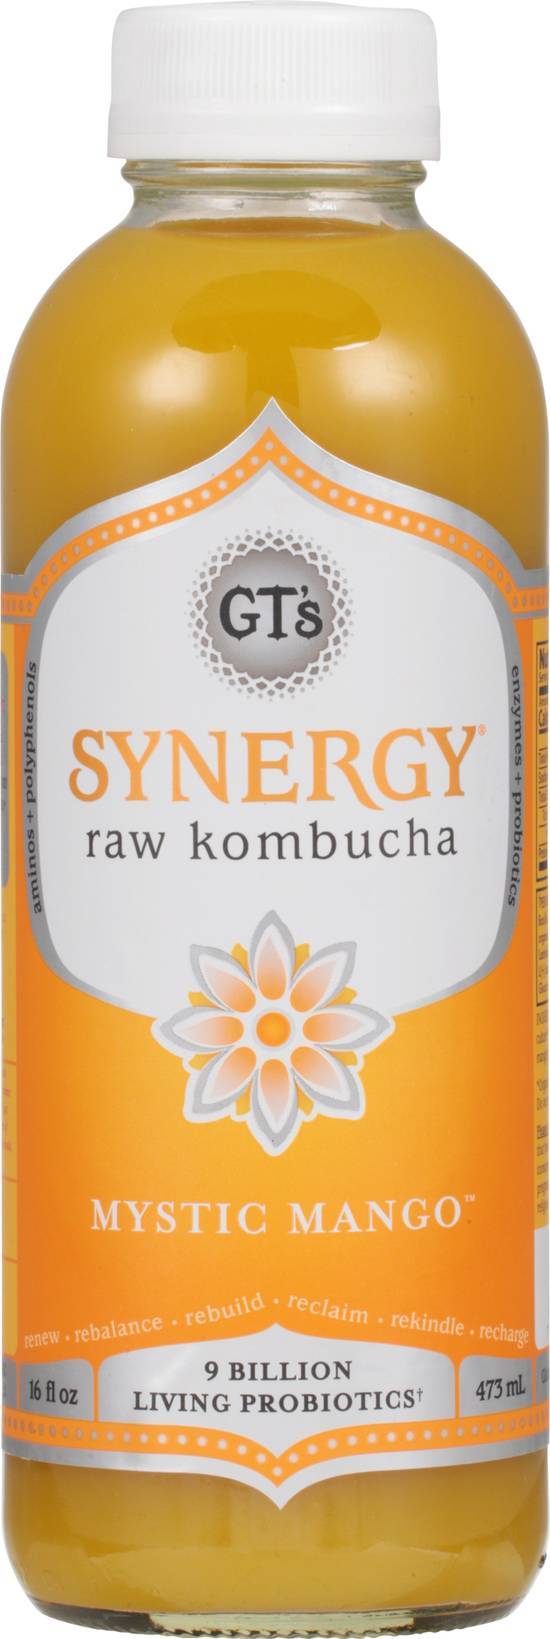 Gt's Synergy Raw Kombucha (16 fl oz) (mystic mango)